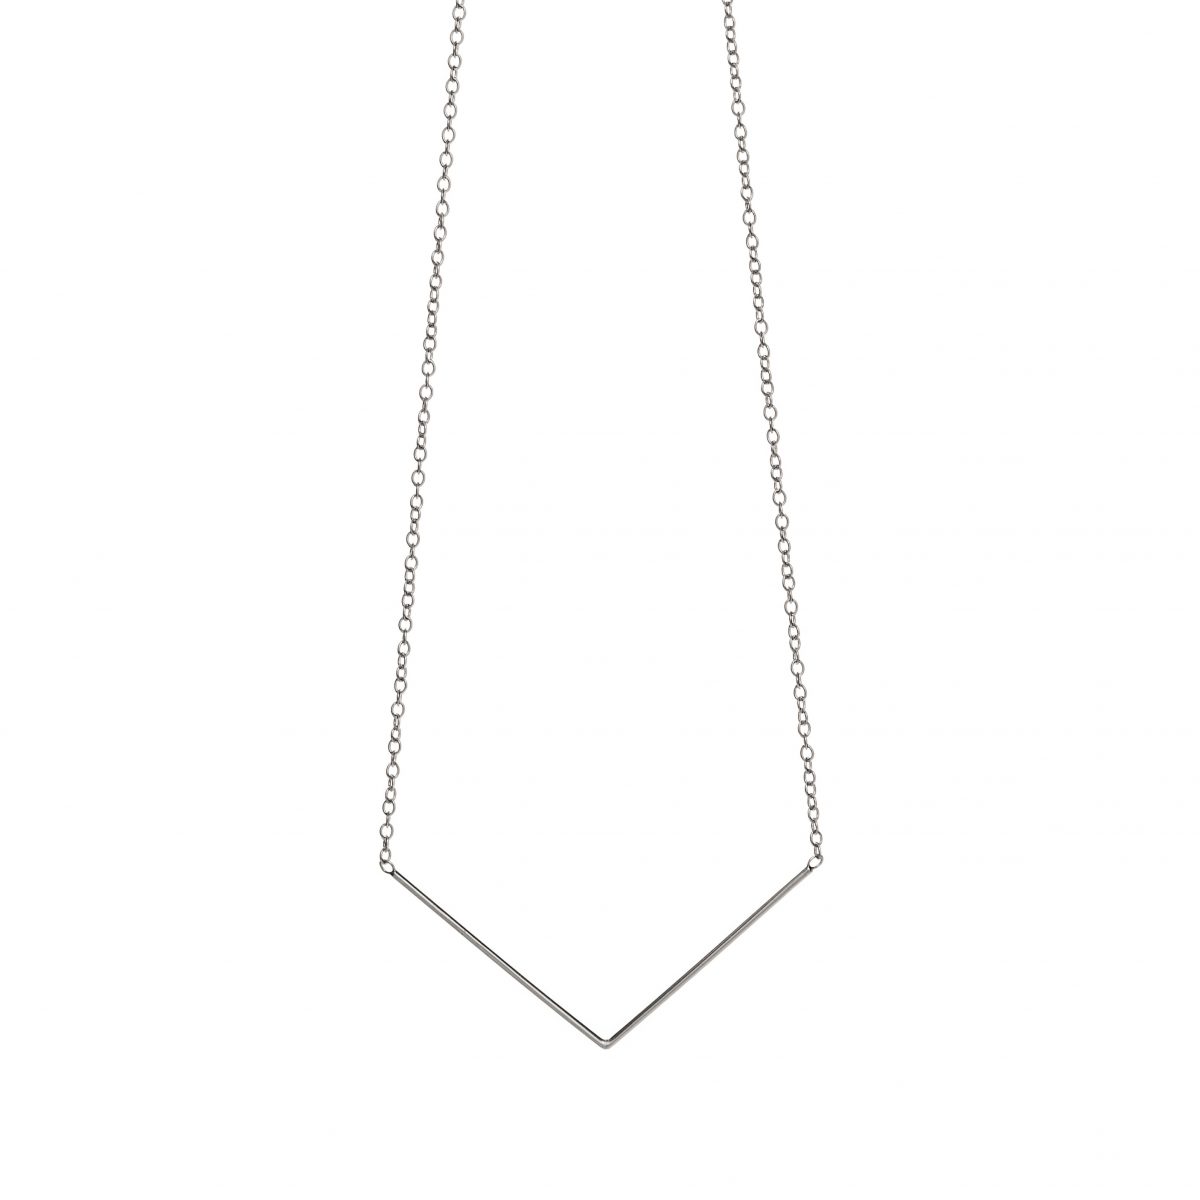 SS-607samojauskaite_jewellery_angle_necklace_silver_main